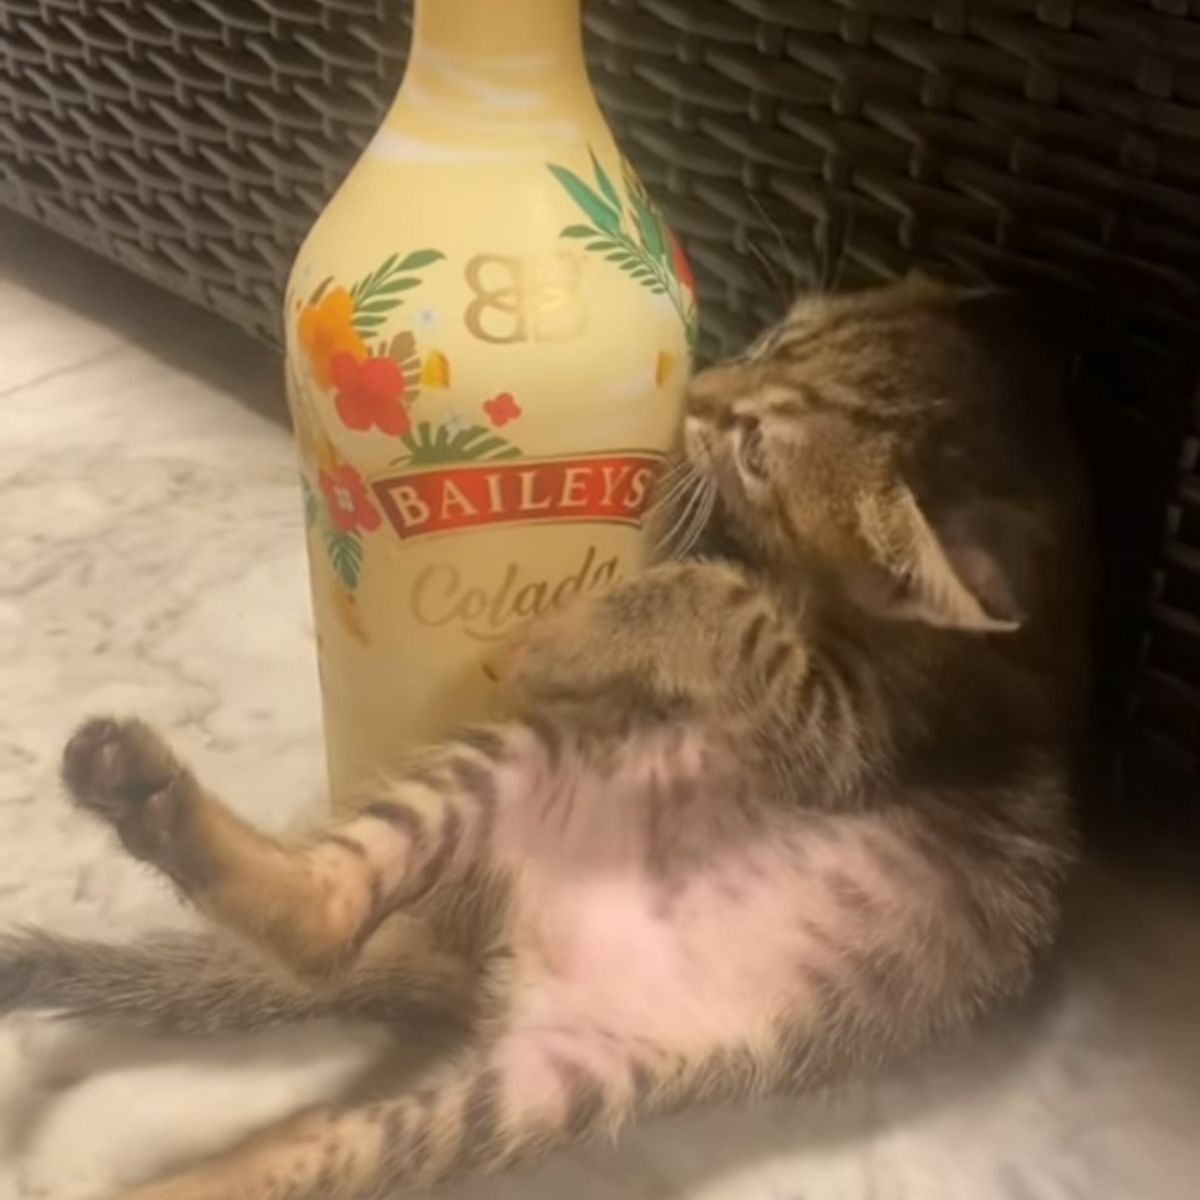 photo of kitten next to a bottle